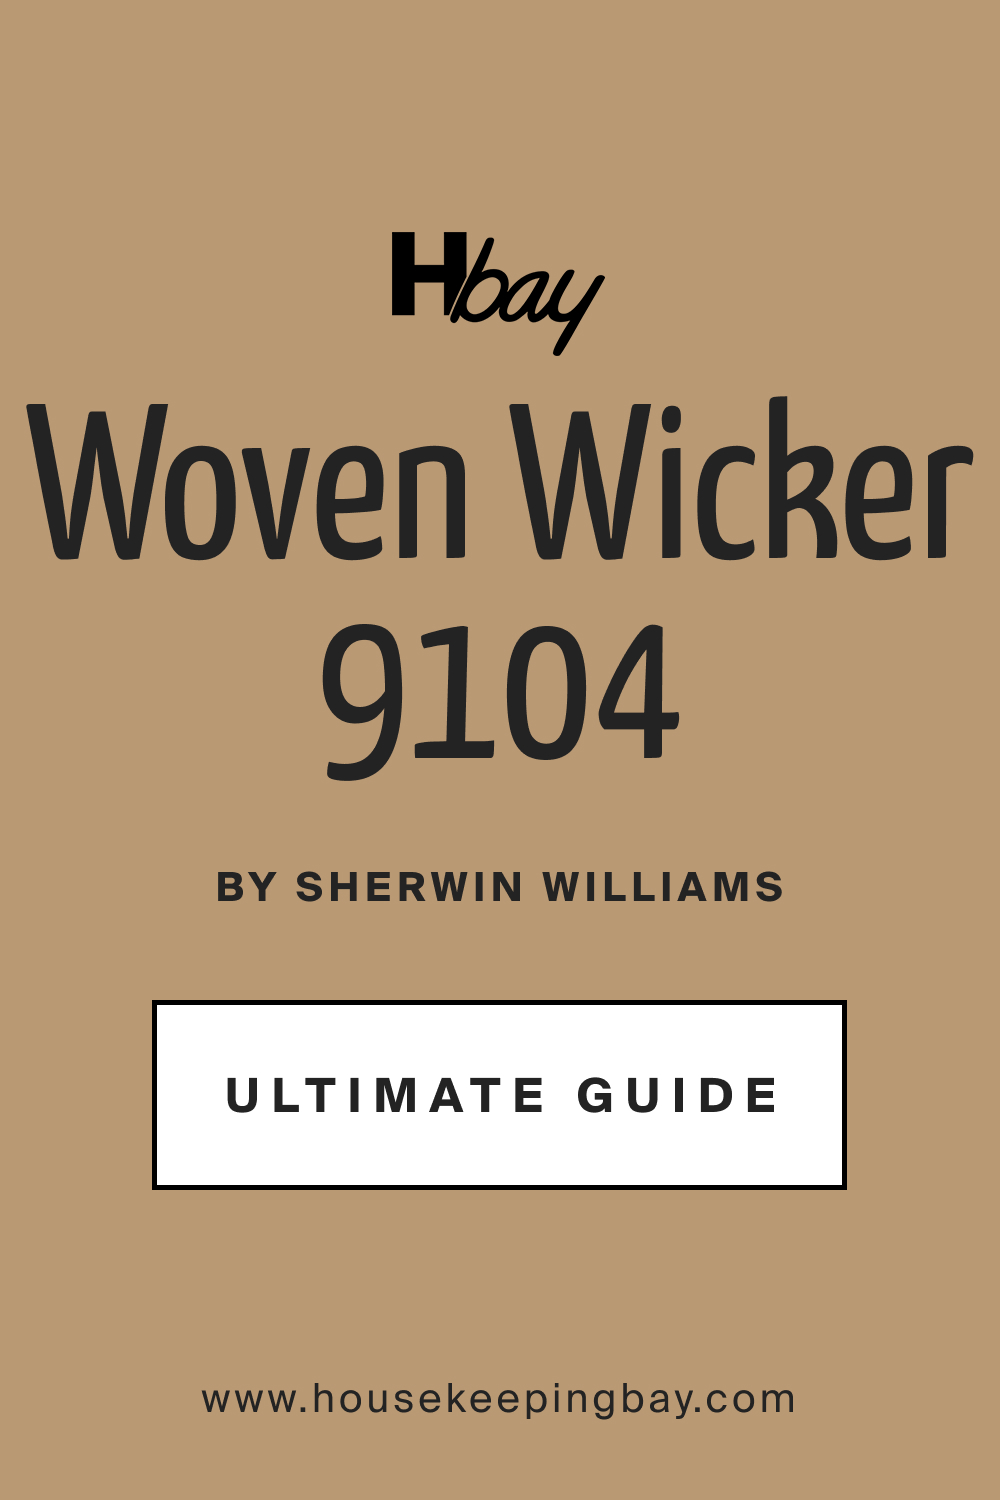 SW 9104 Woven Wicker by Sherwin Williams Ultimate Guide